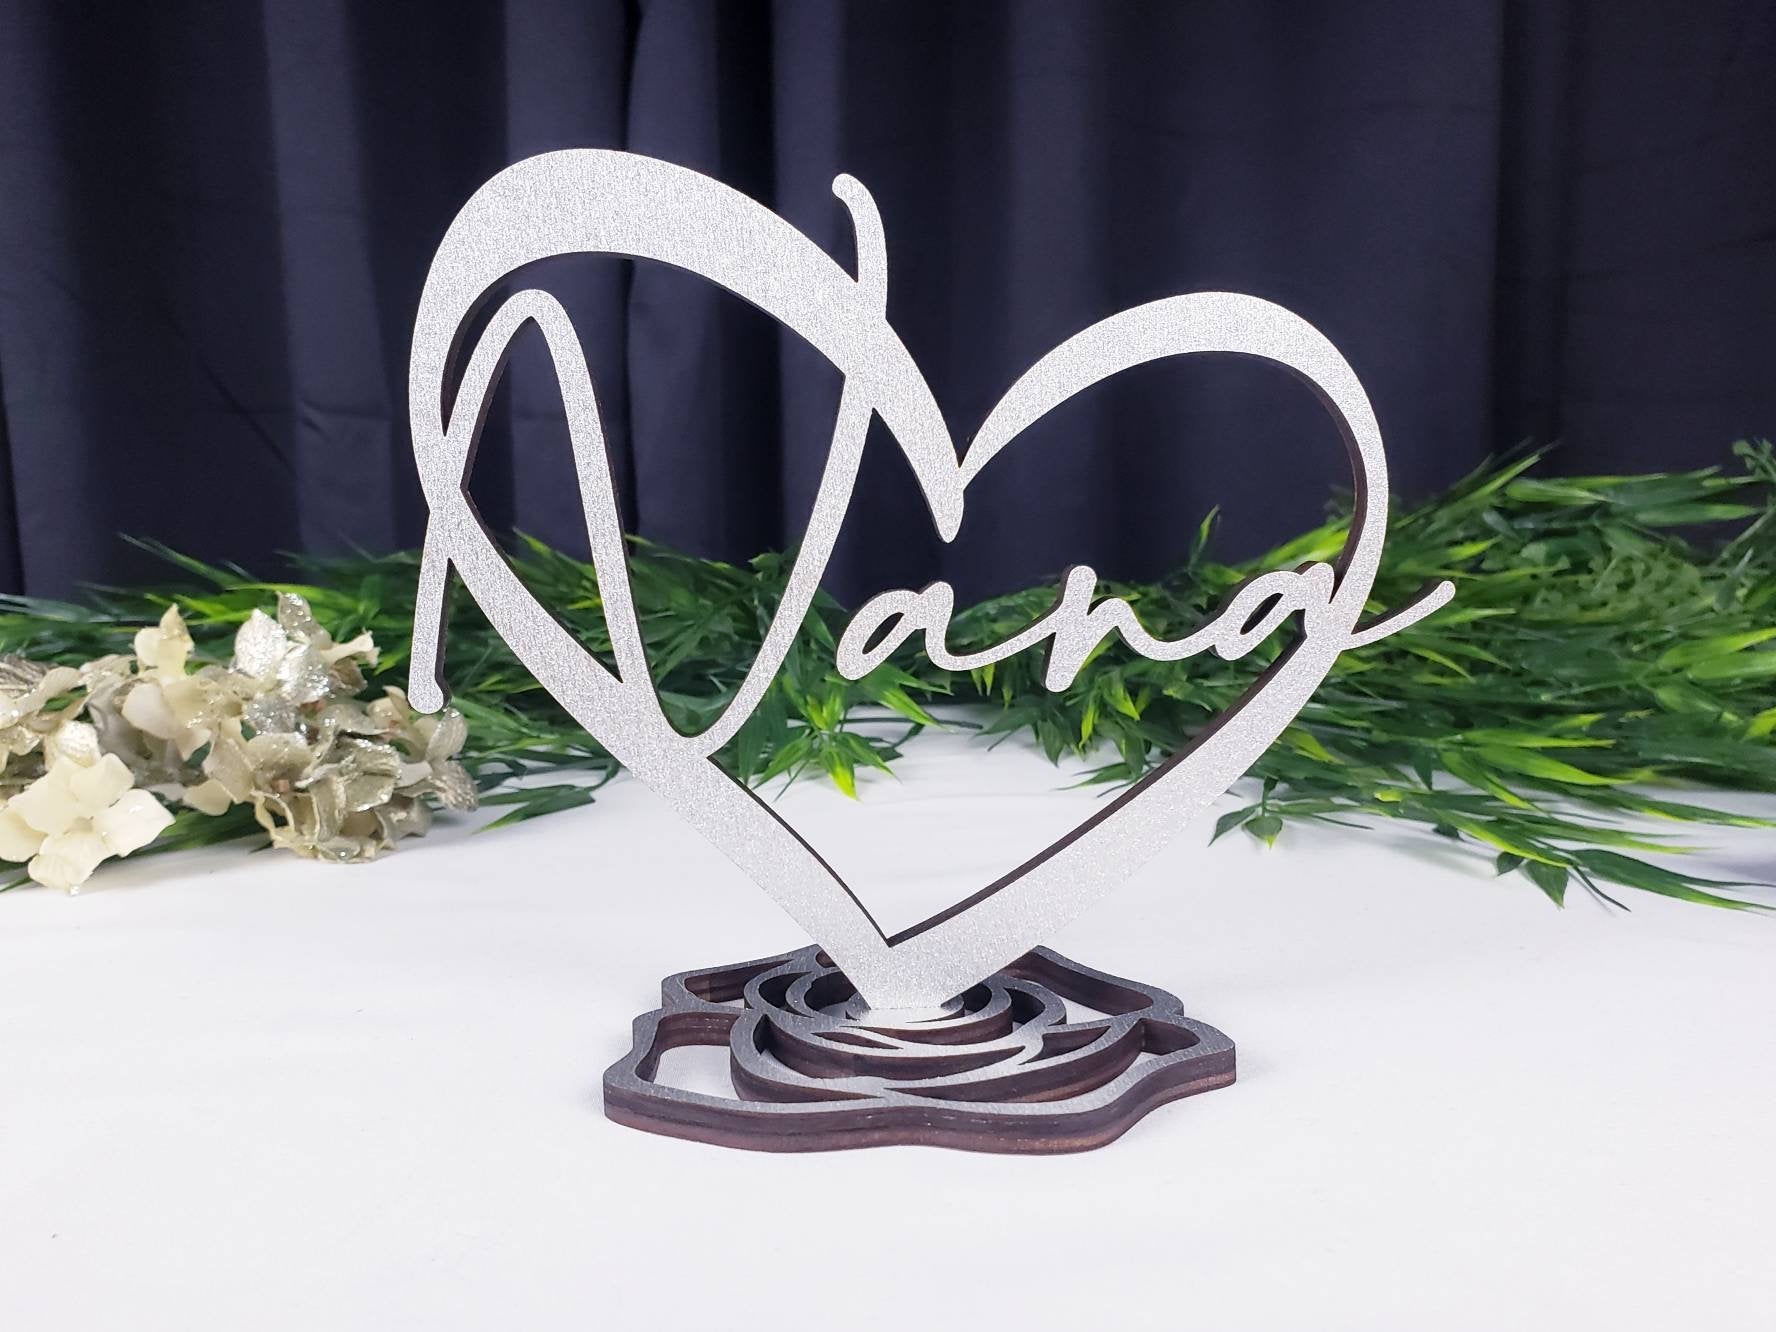 Nana Heart Table Sign